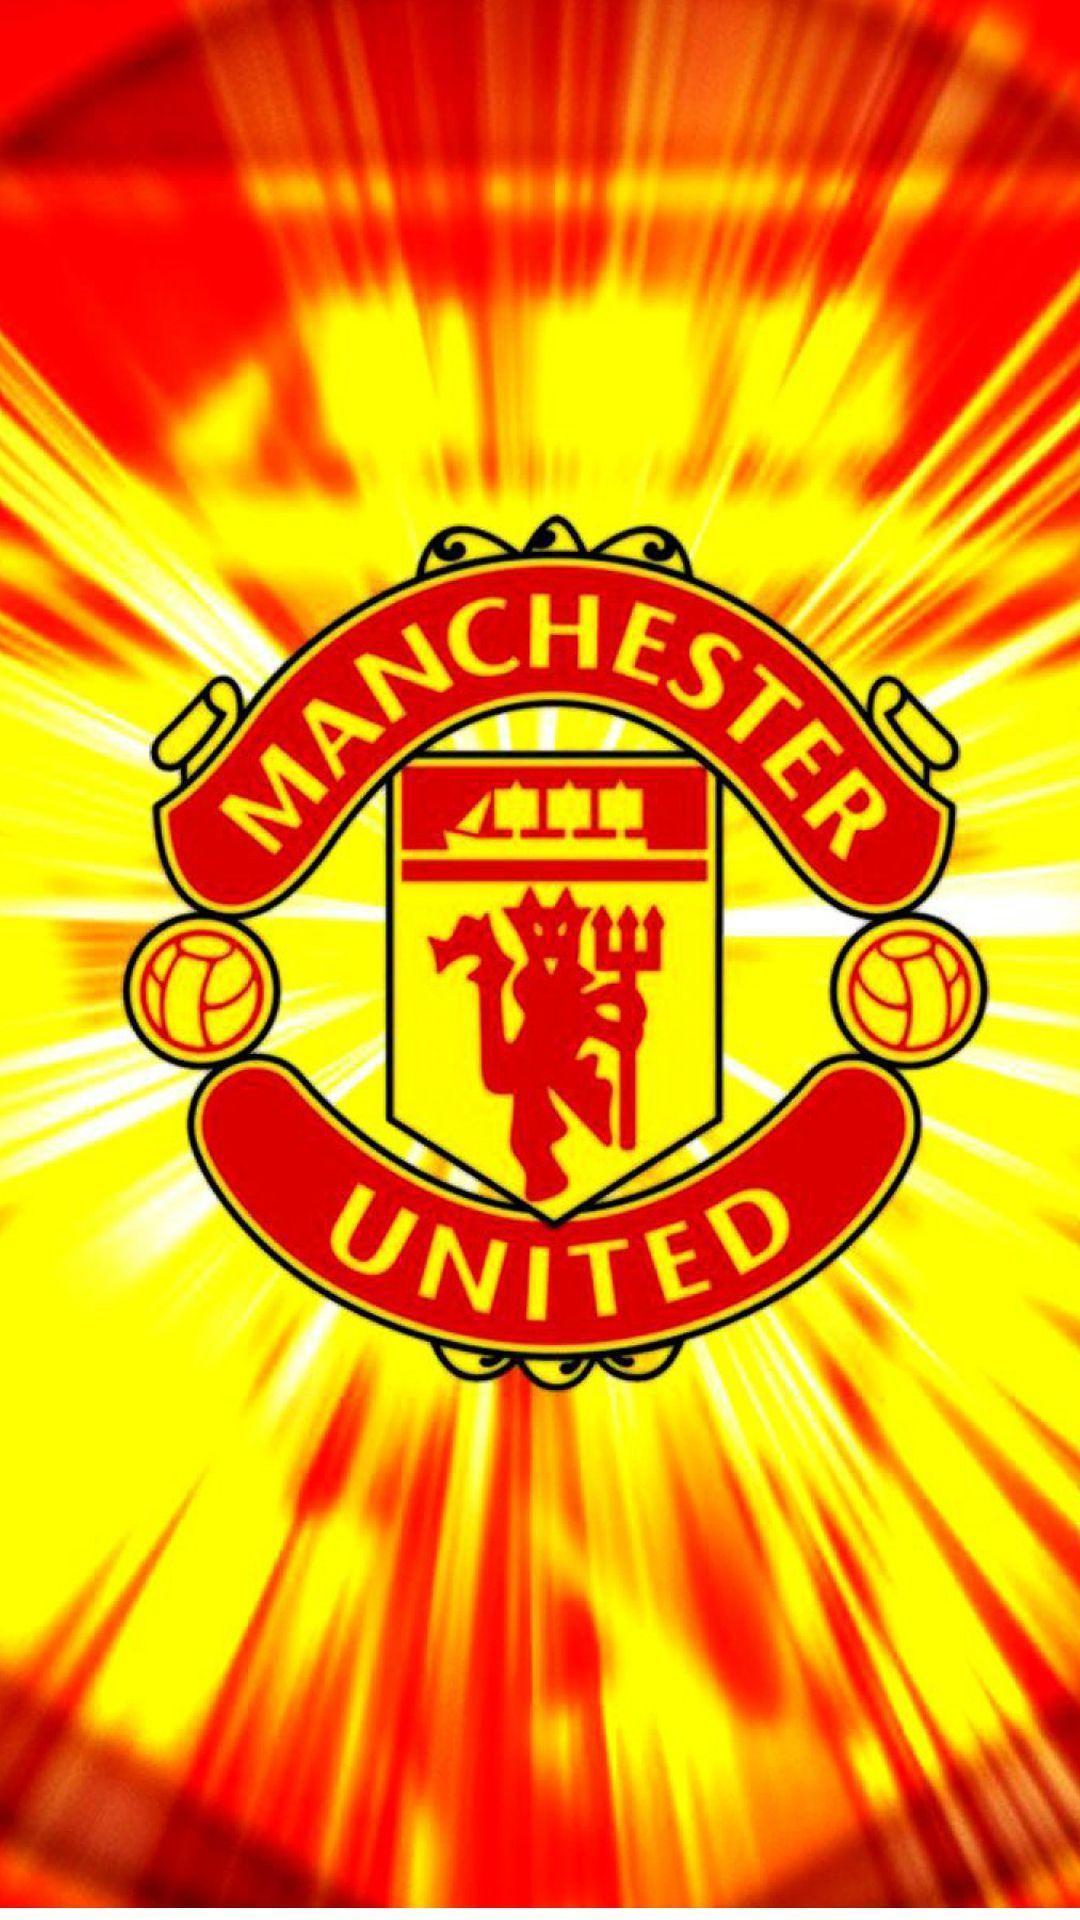 Wallpapers Logo Manchester United Terbaru 2017 - Wallpaper Cave